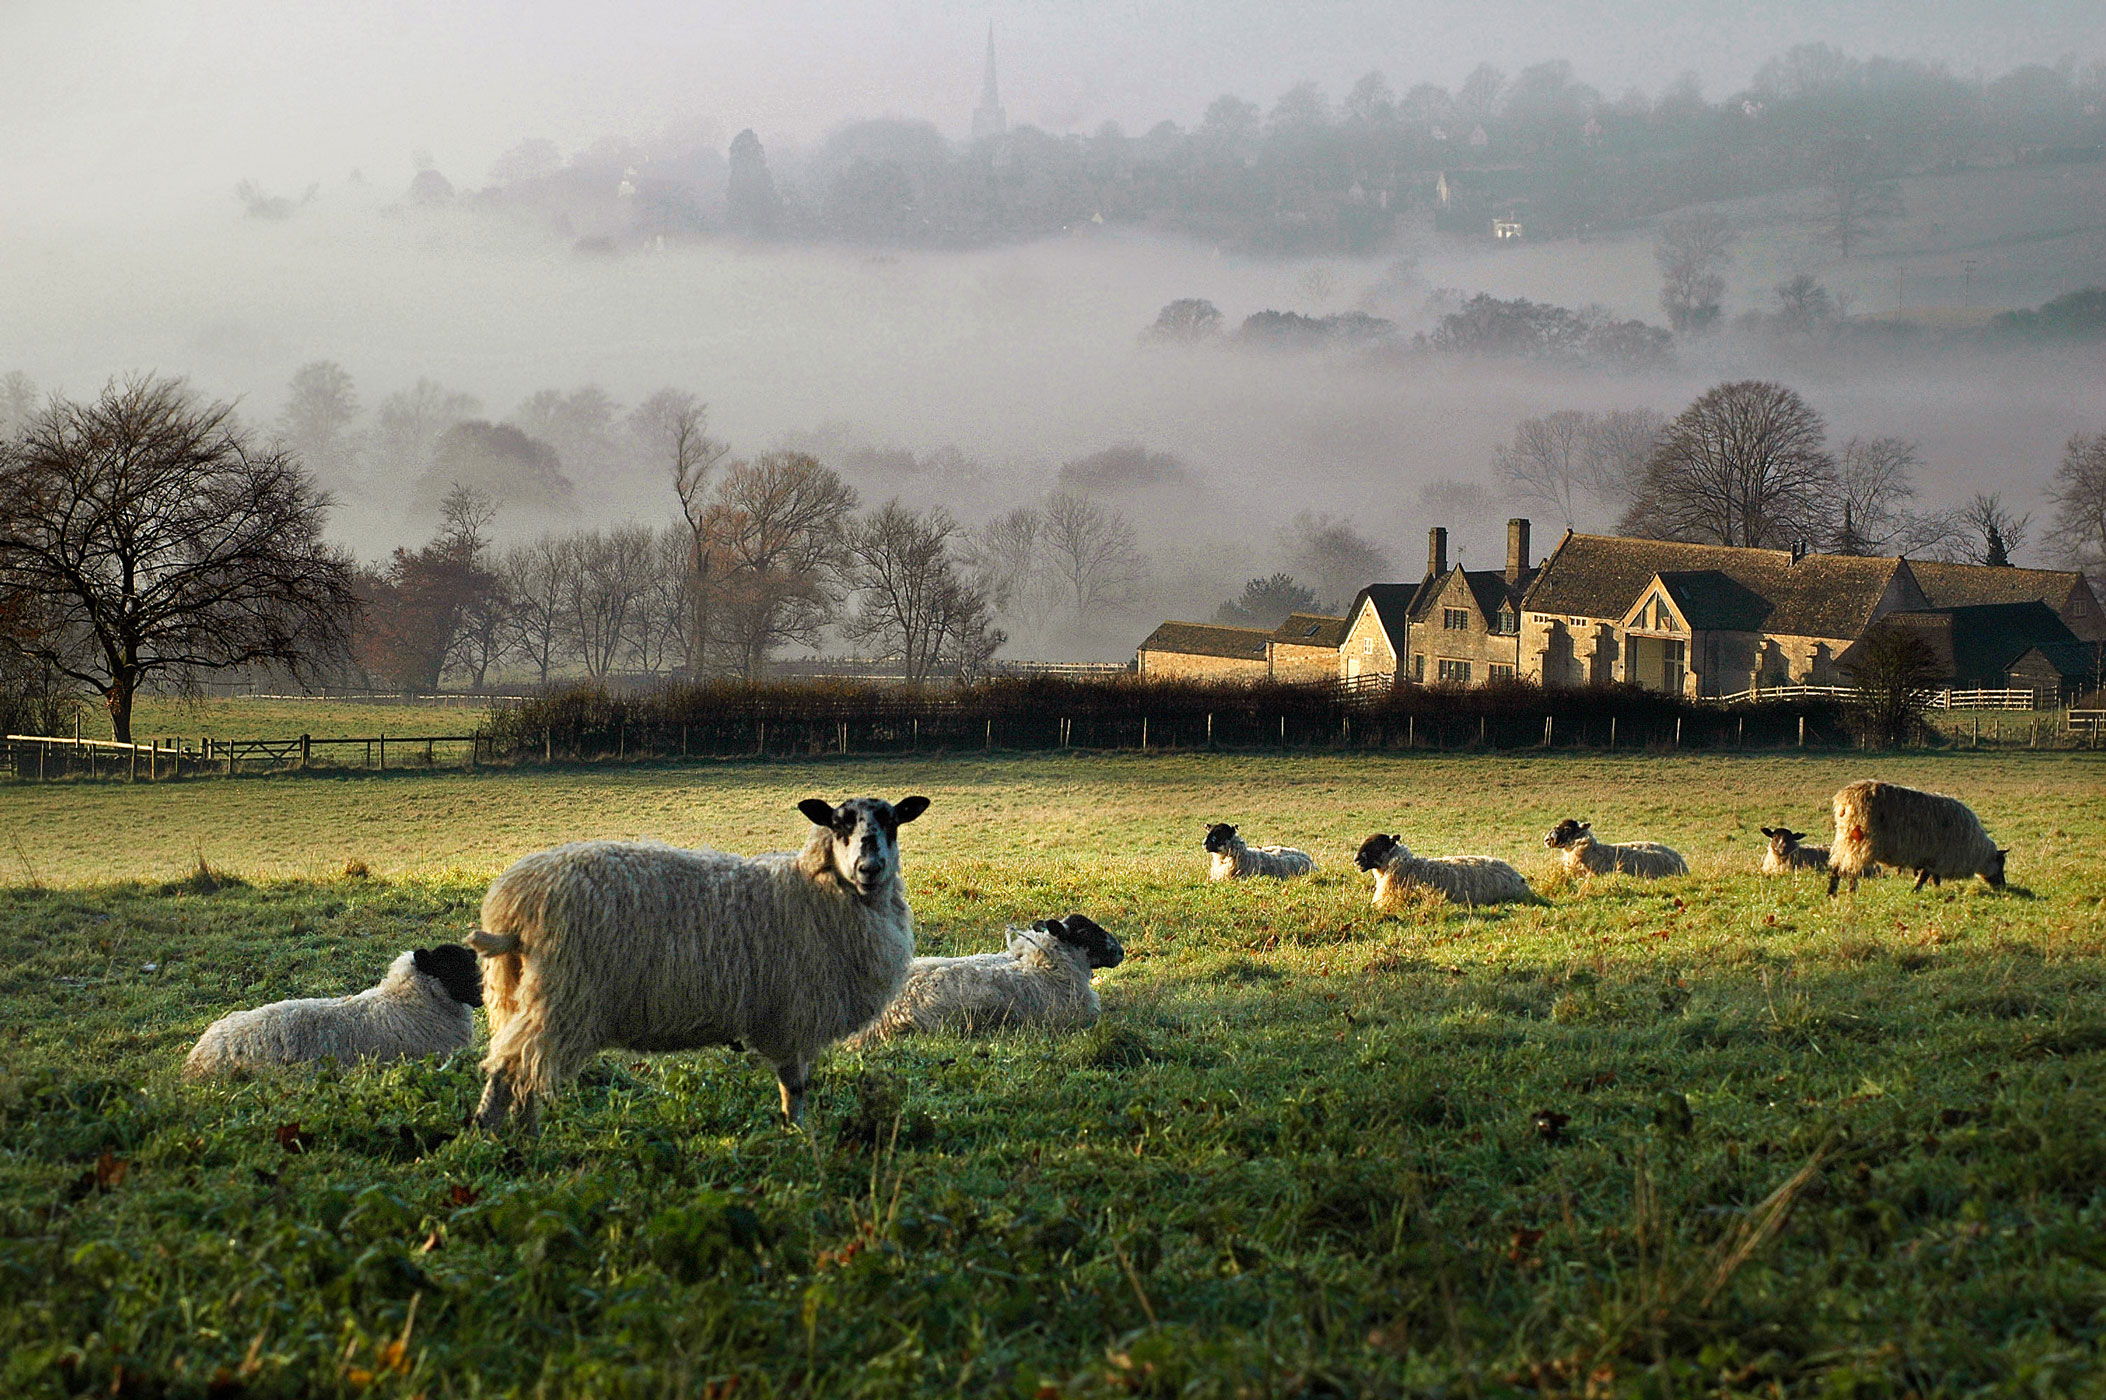 See countryside. Котсуолдс Англия ферма. Сельская местность в Англии Котсуолд. Йоркшир Англия ферма. Котсуолдс Англия овцы.